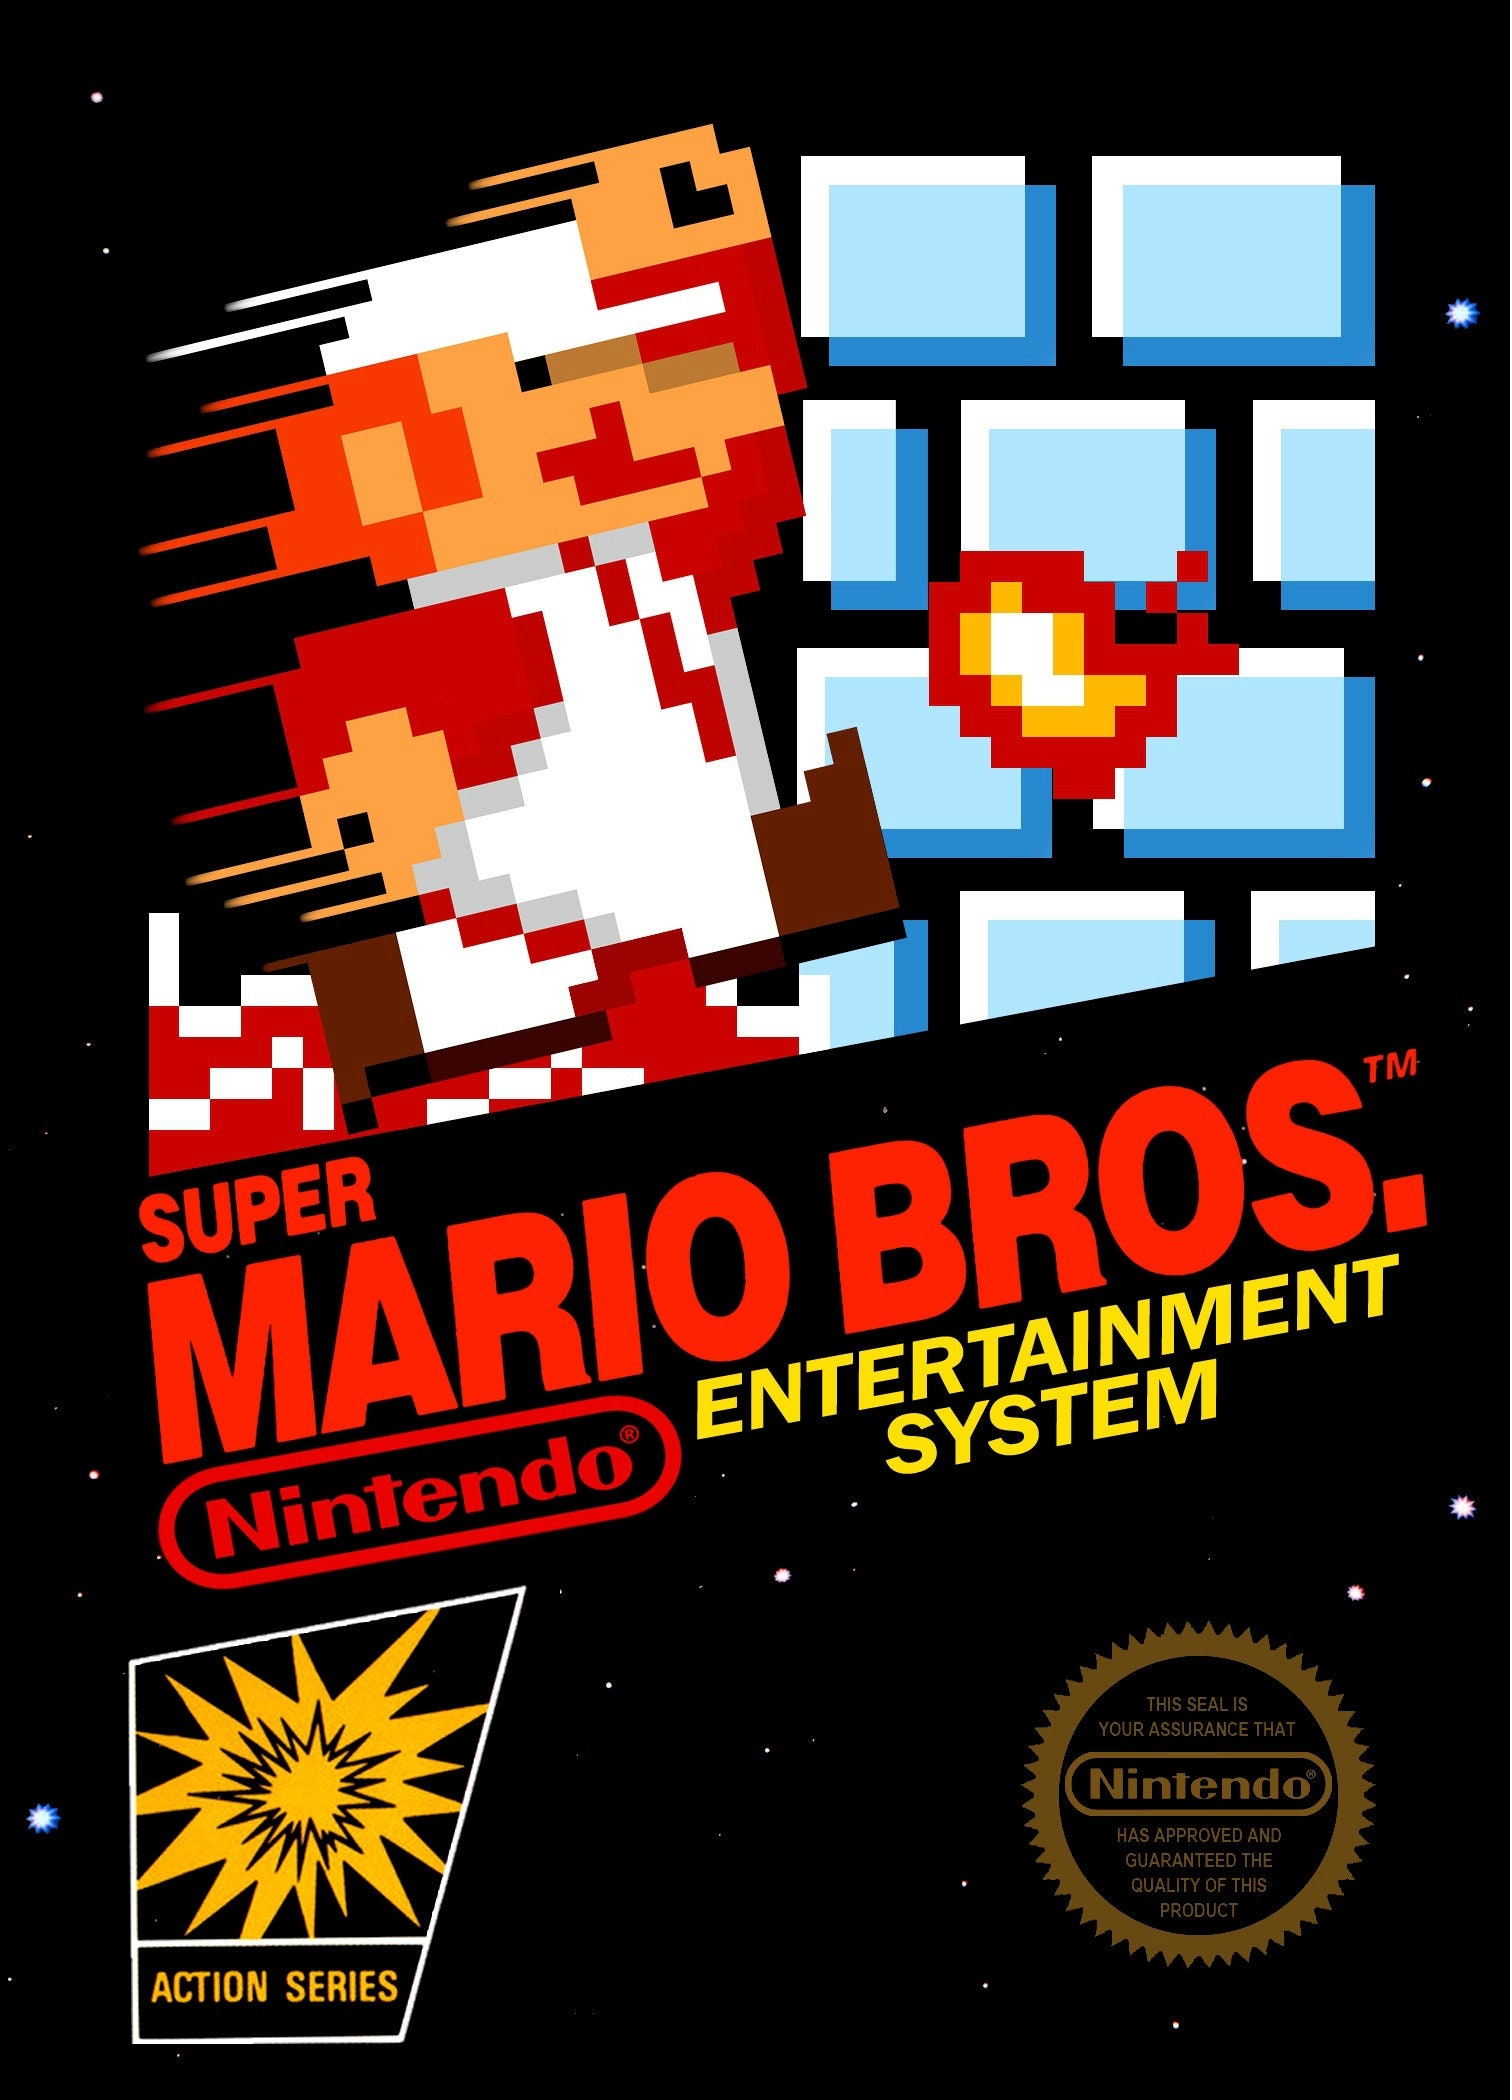 Super Mario Bros 1 2 3 Nintendo NES Poster Size A3 / A4 Retro Gaming - Etsy | Poster